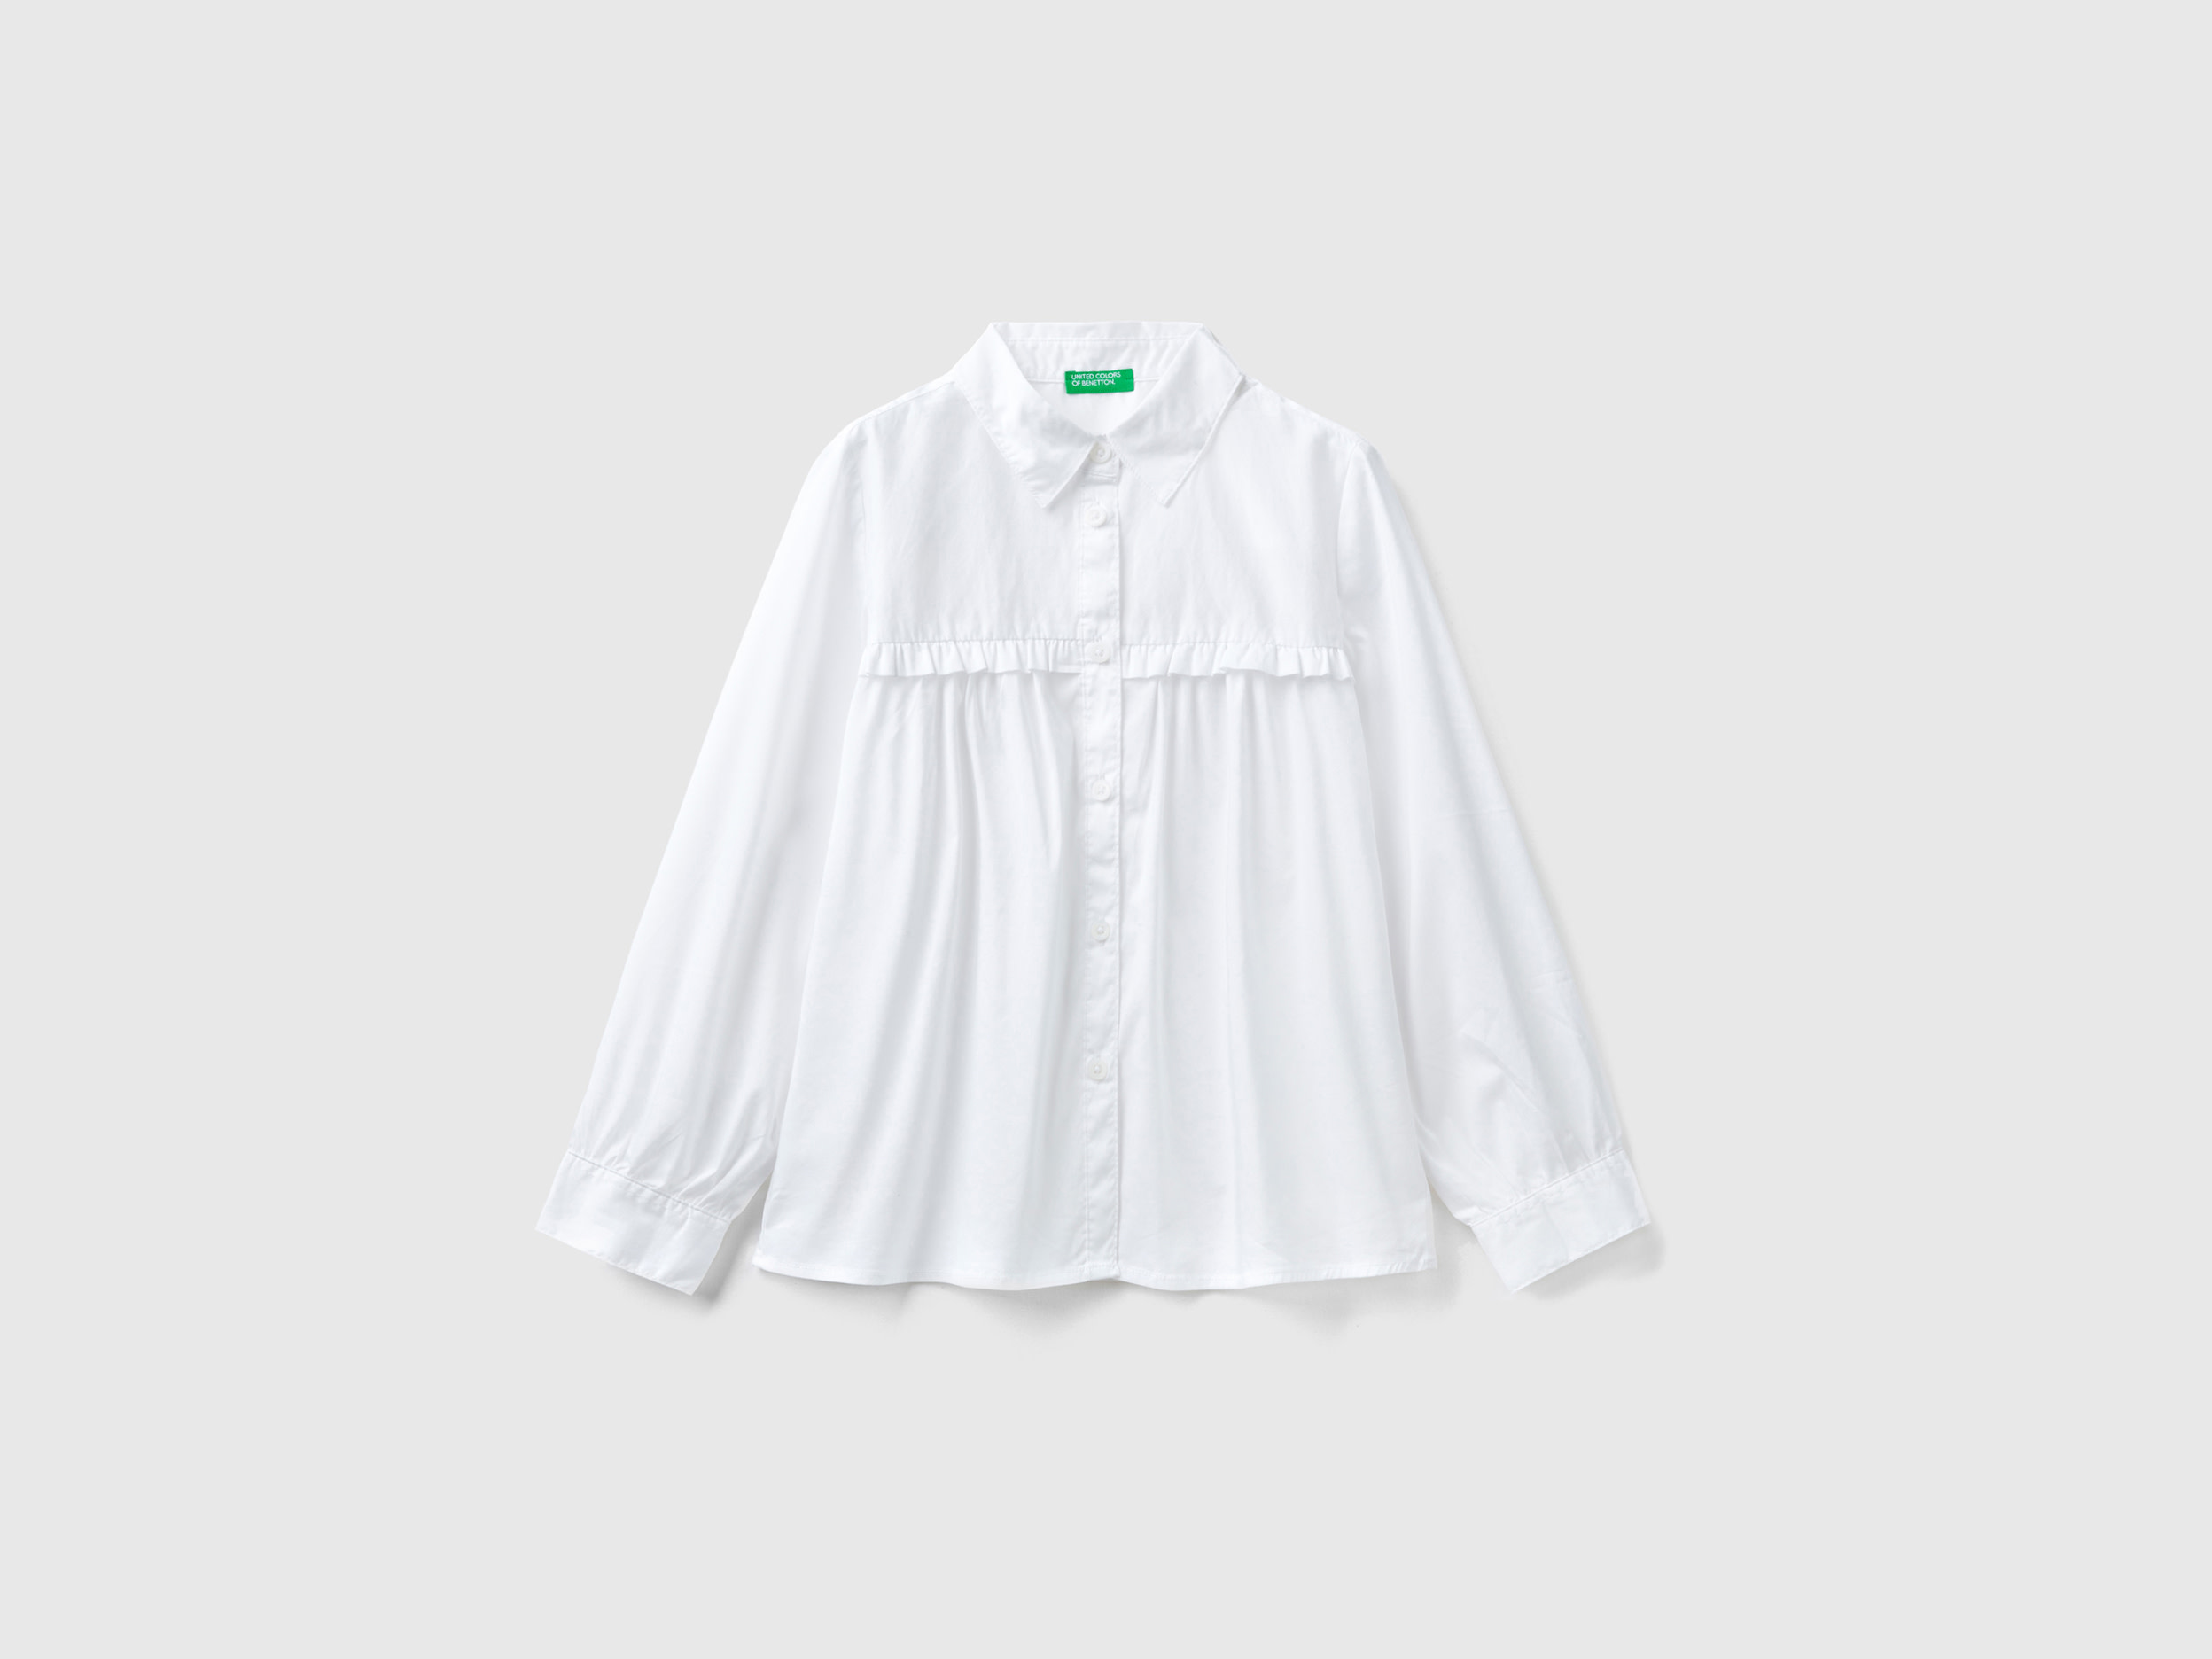 Benetton, Shirt With Rouches On The Yoke, size 2XL, White, Kids